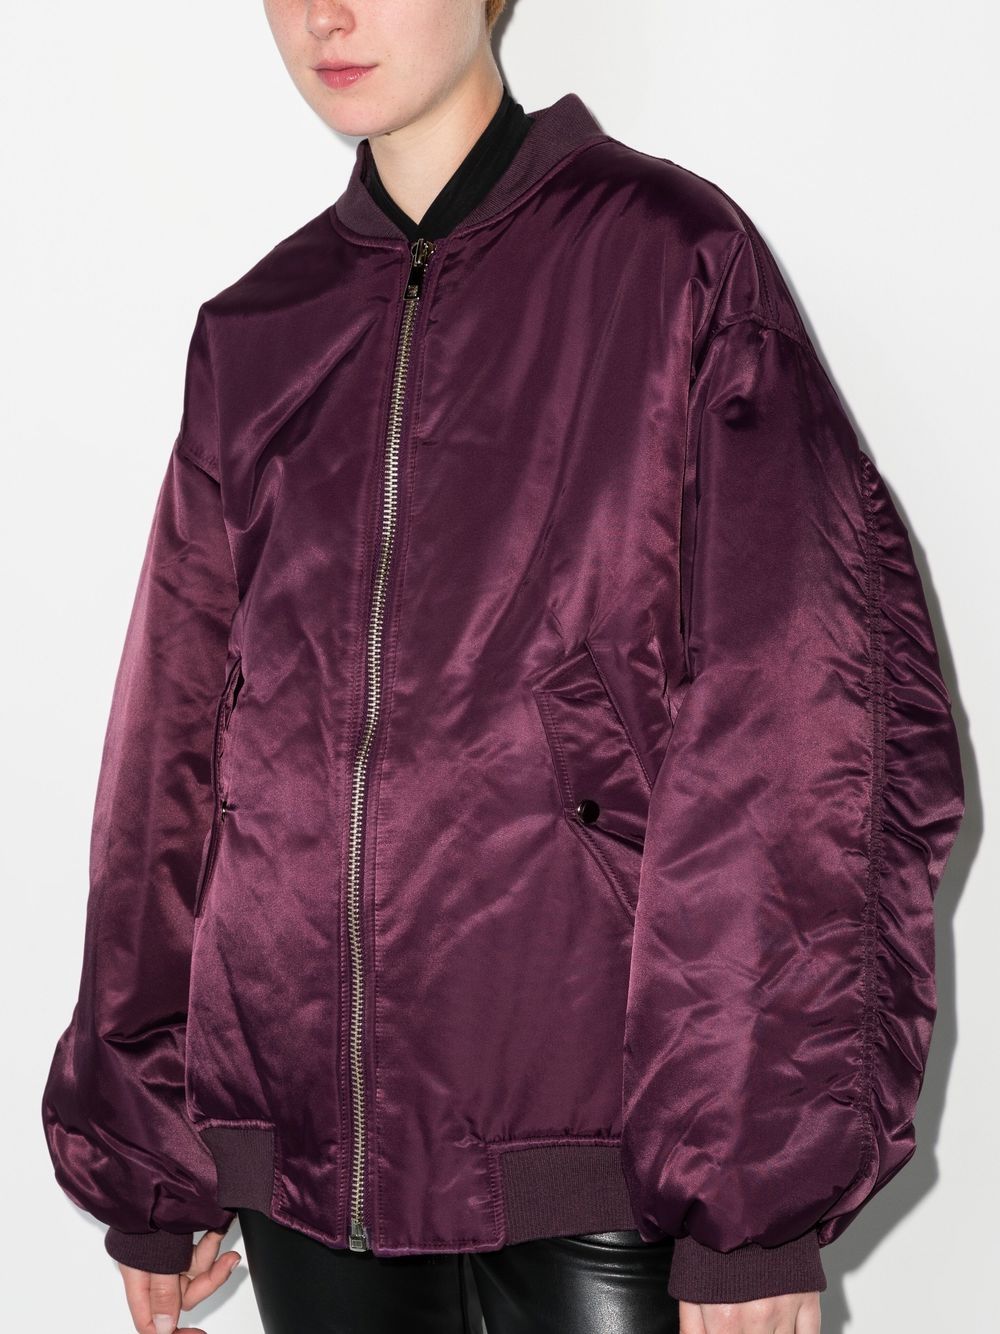 Astra bomber jacket, £335, Frankie Shop